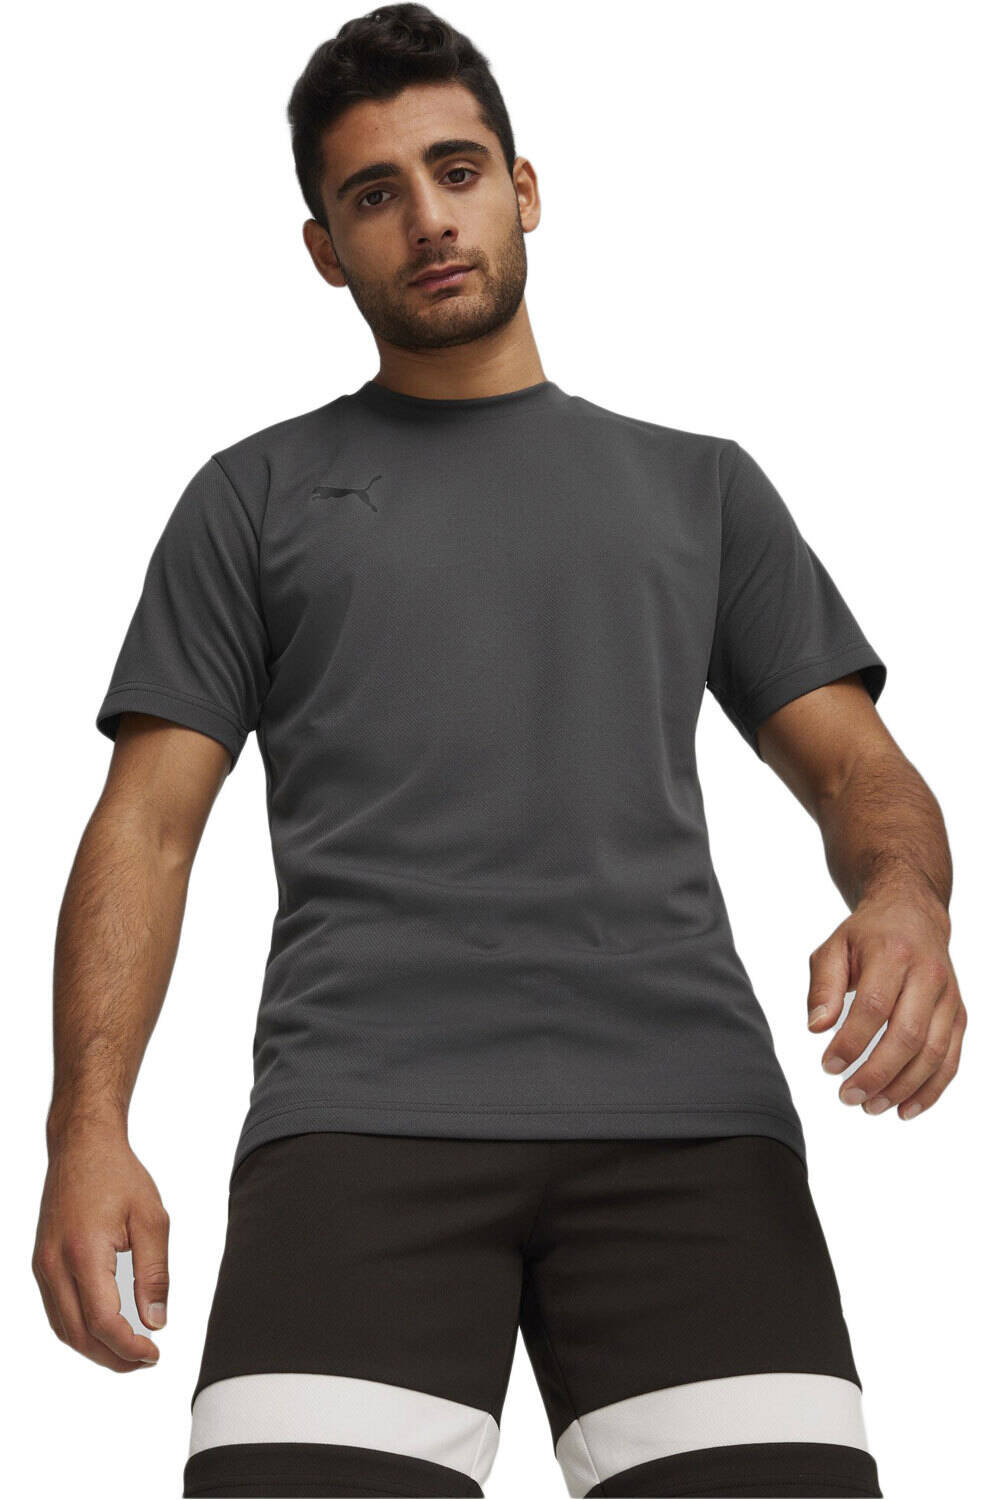 Puma camisetas fútbol manga corta individualRISE Logo Jersey vista frontal